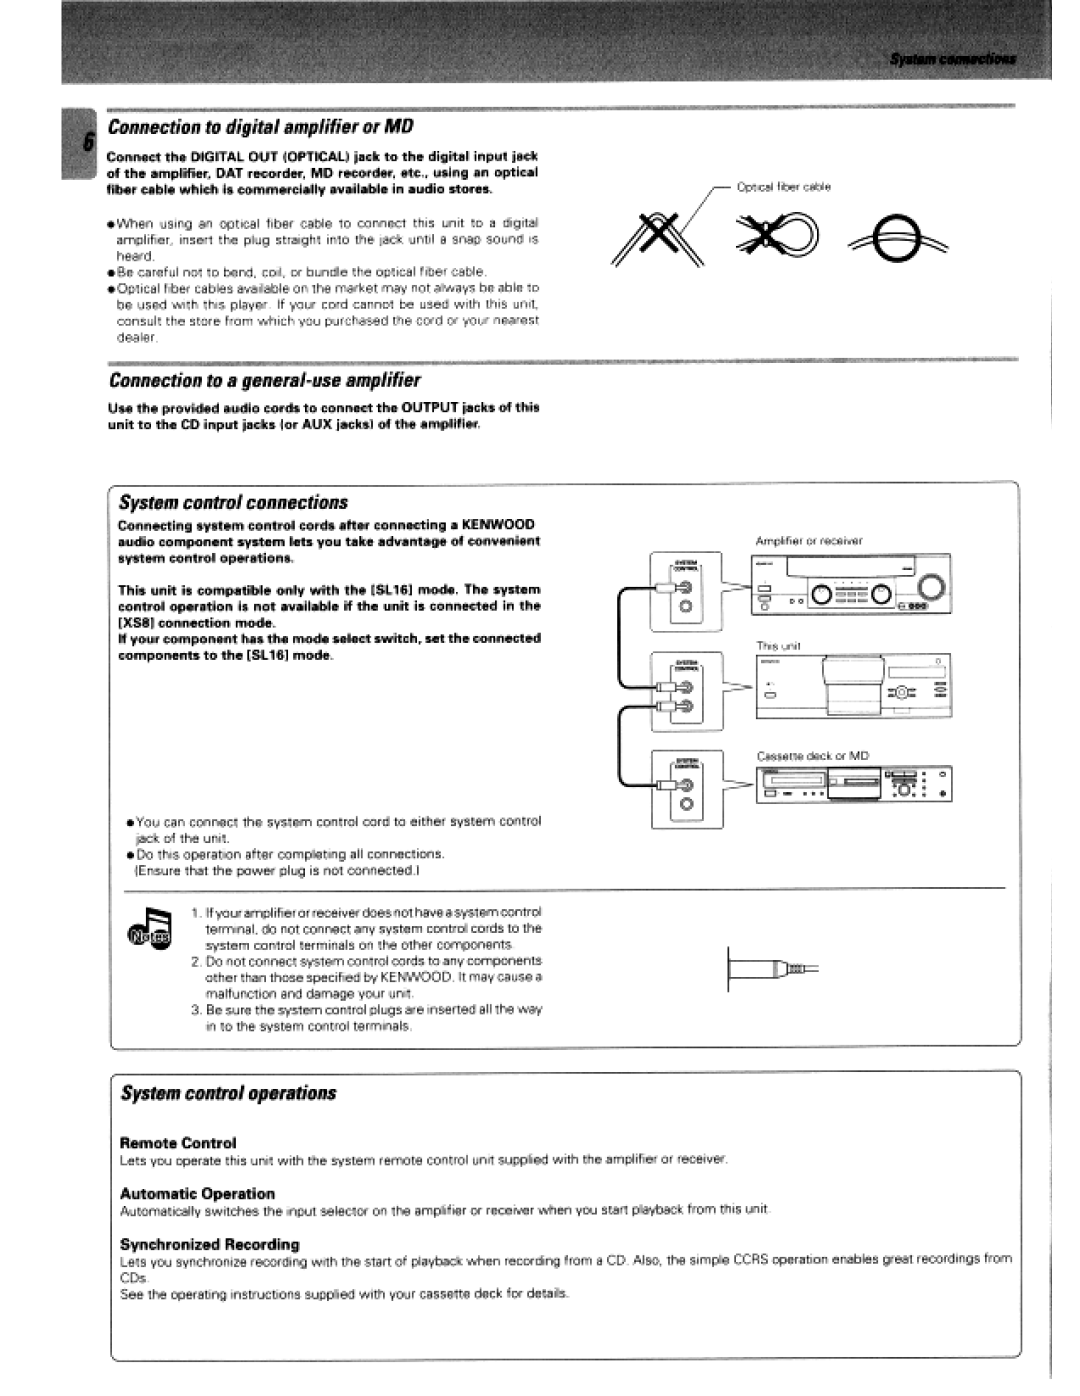 Kenwood DPF-J5030, CD-424M manual 